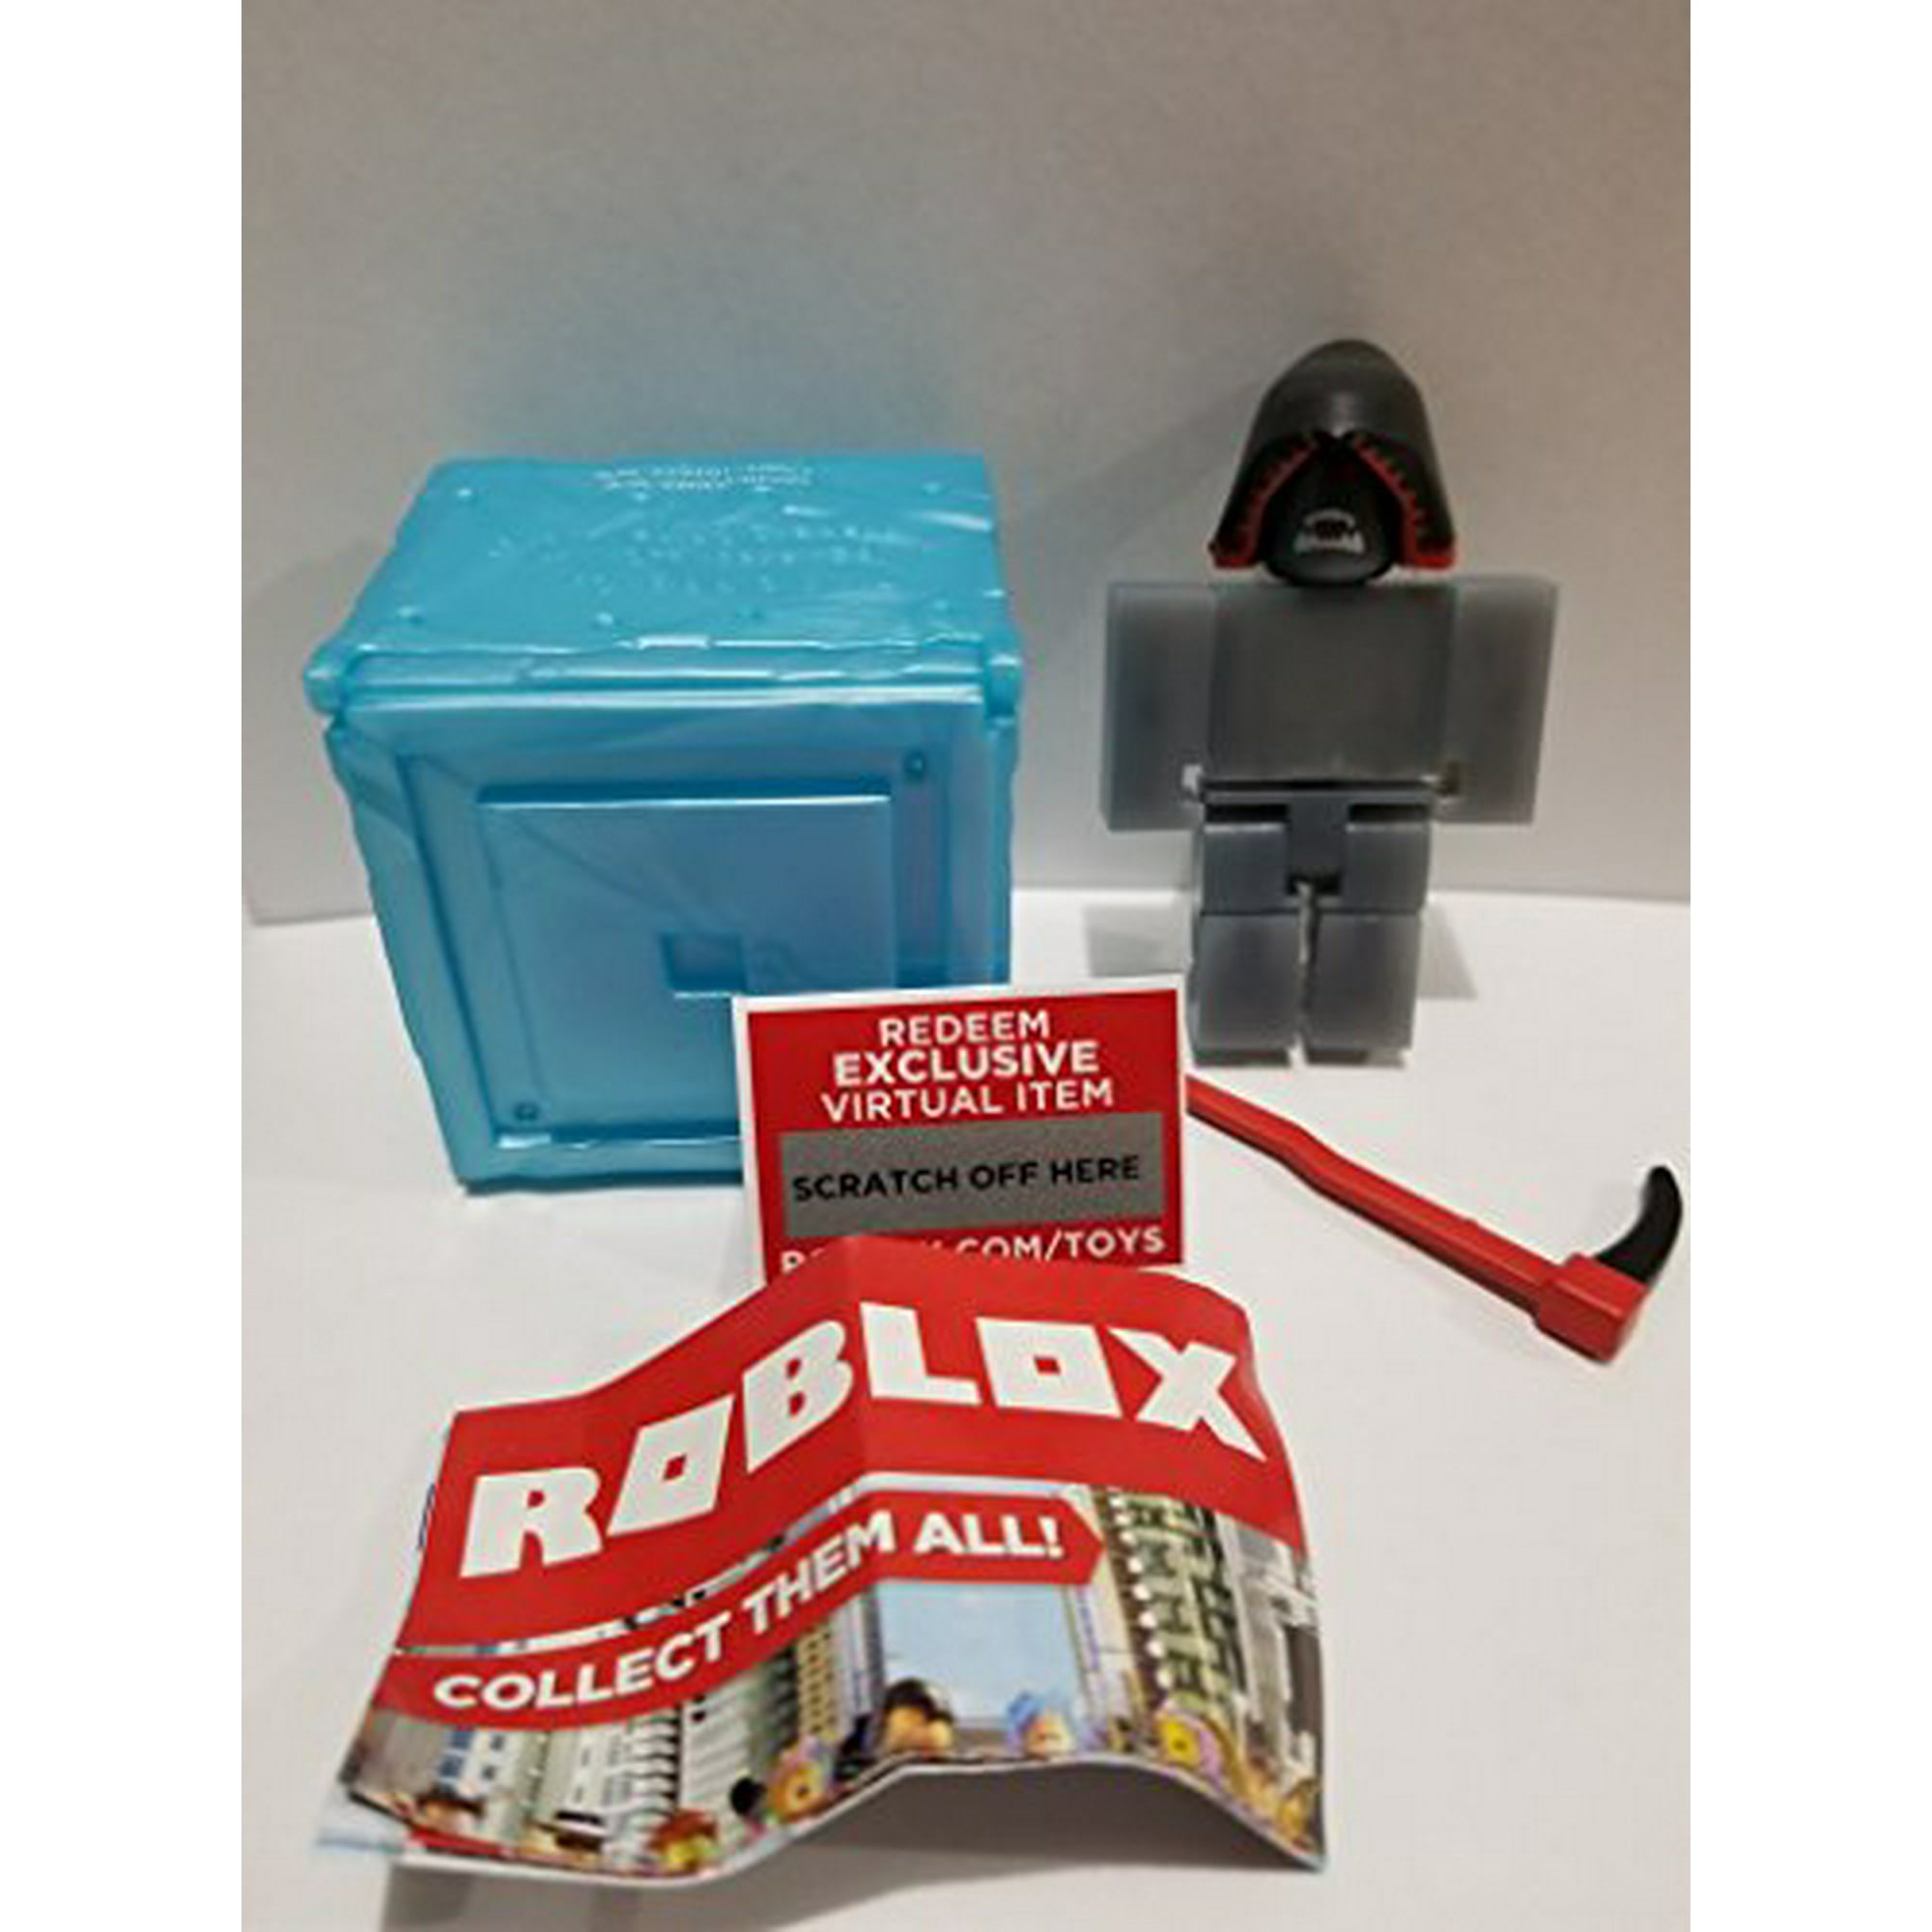 Roblox Series 3 The Beast Action Figure Mystery Box Virtual Item Code 2 5 Walmart Canada - roblox series 2 roblox super fan action figure mystery box virtual item code 2 5 walmart canada